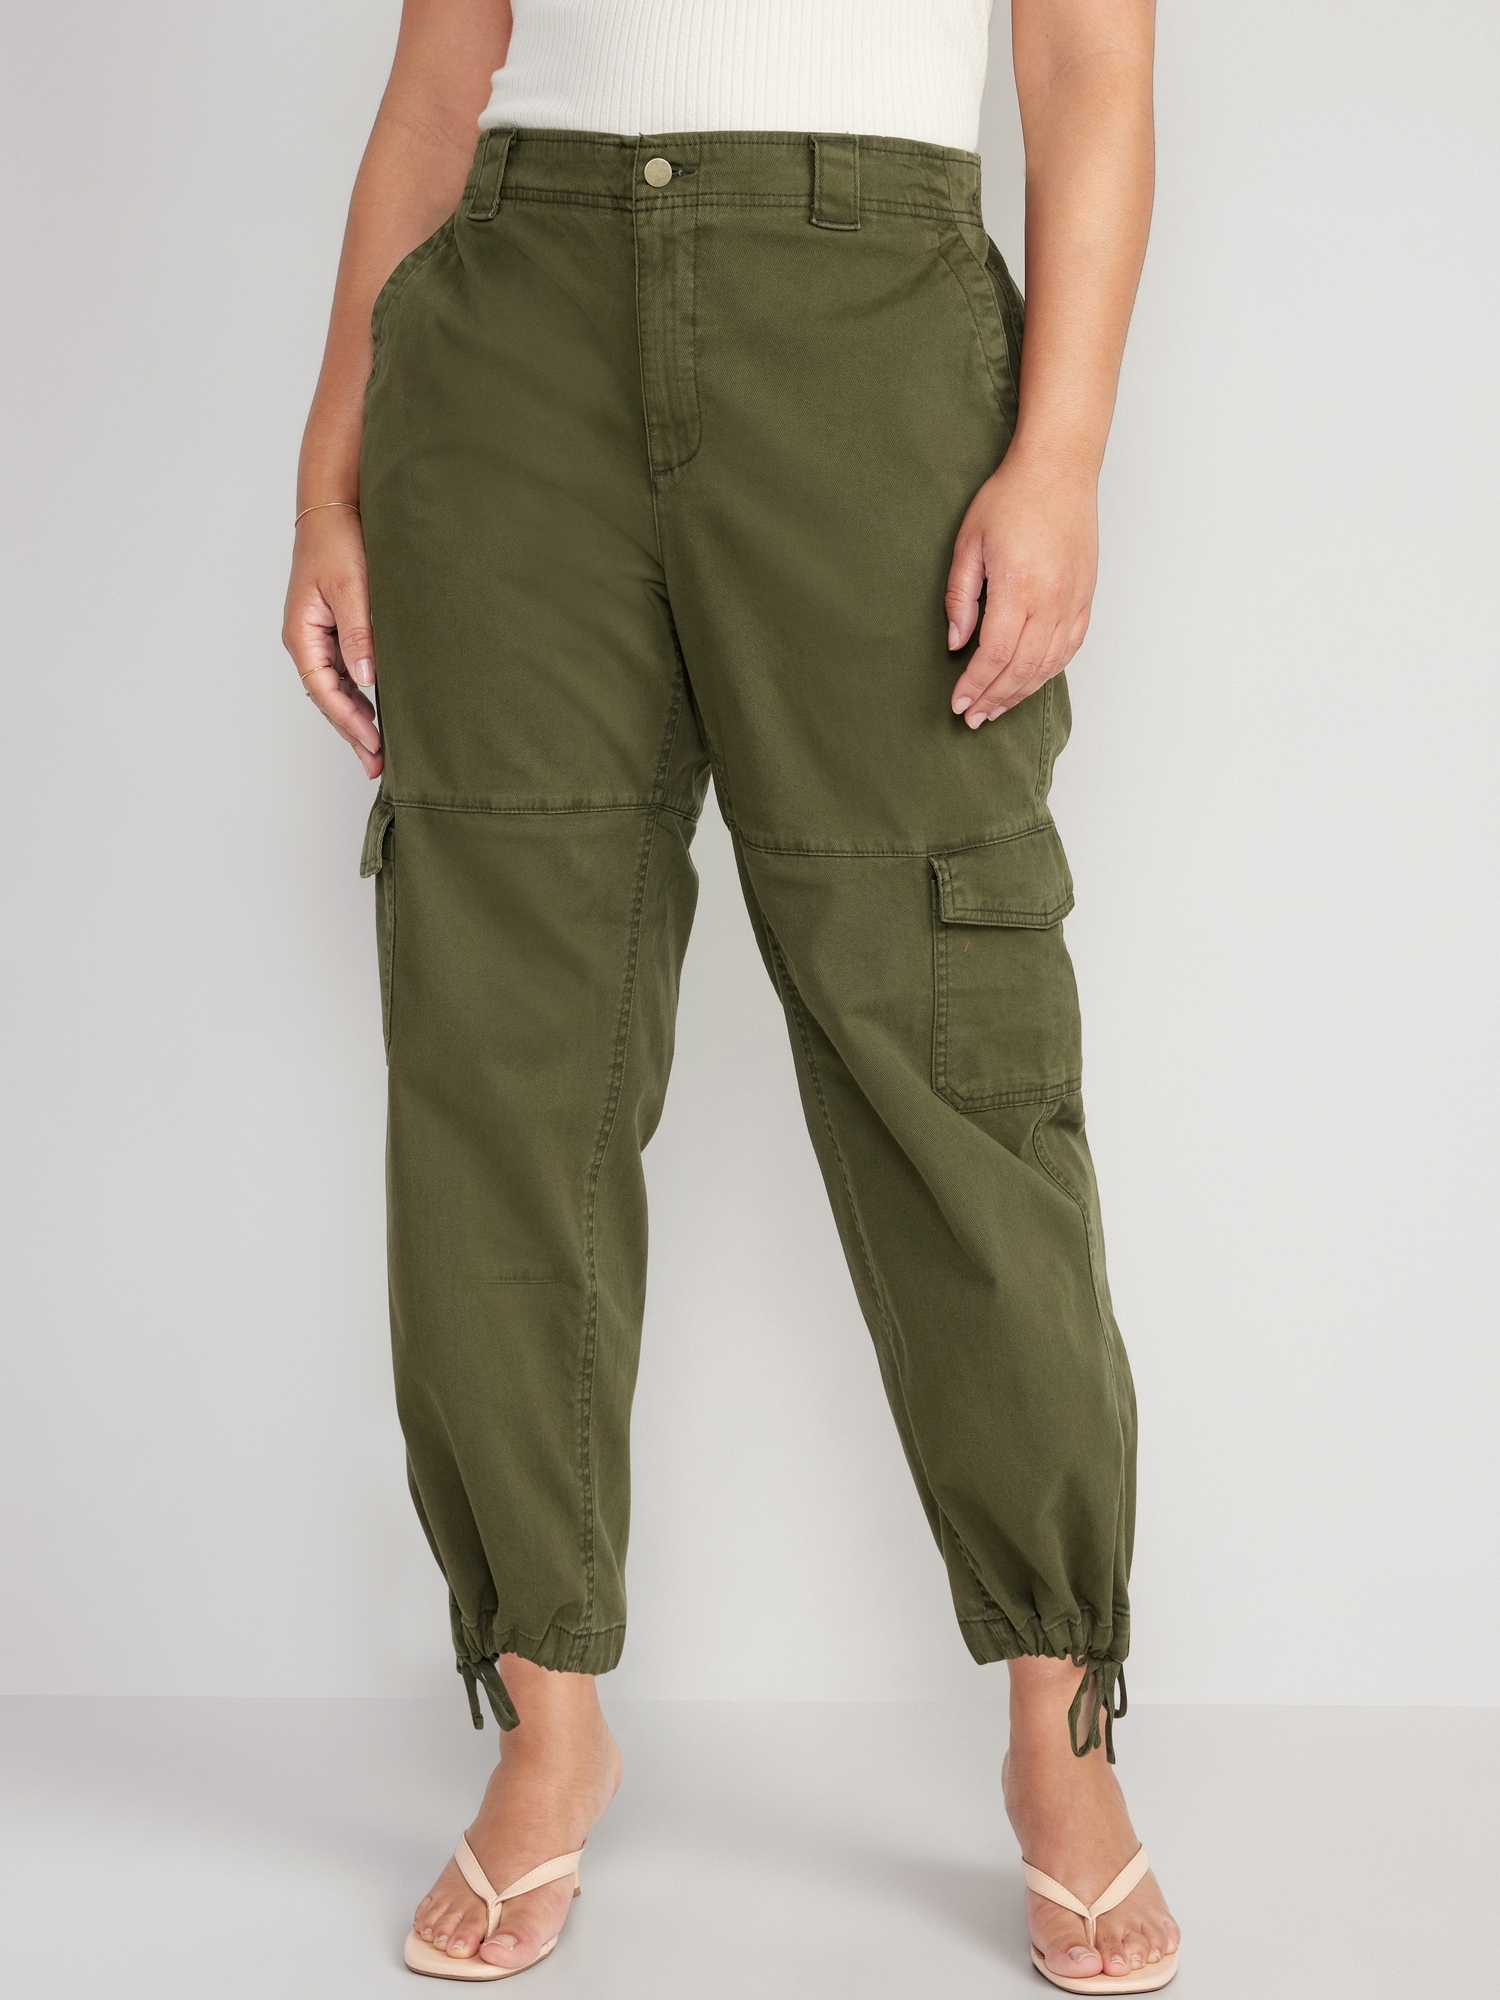 Flame Resistant Pants | Navy Cargo Pants | Blacklader Workwear